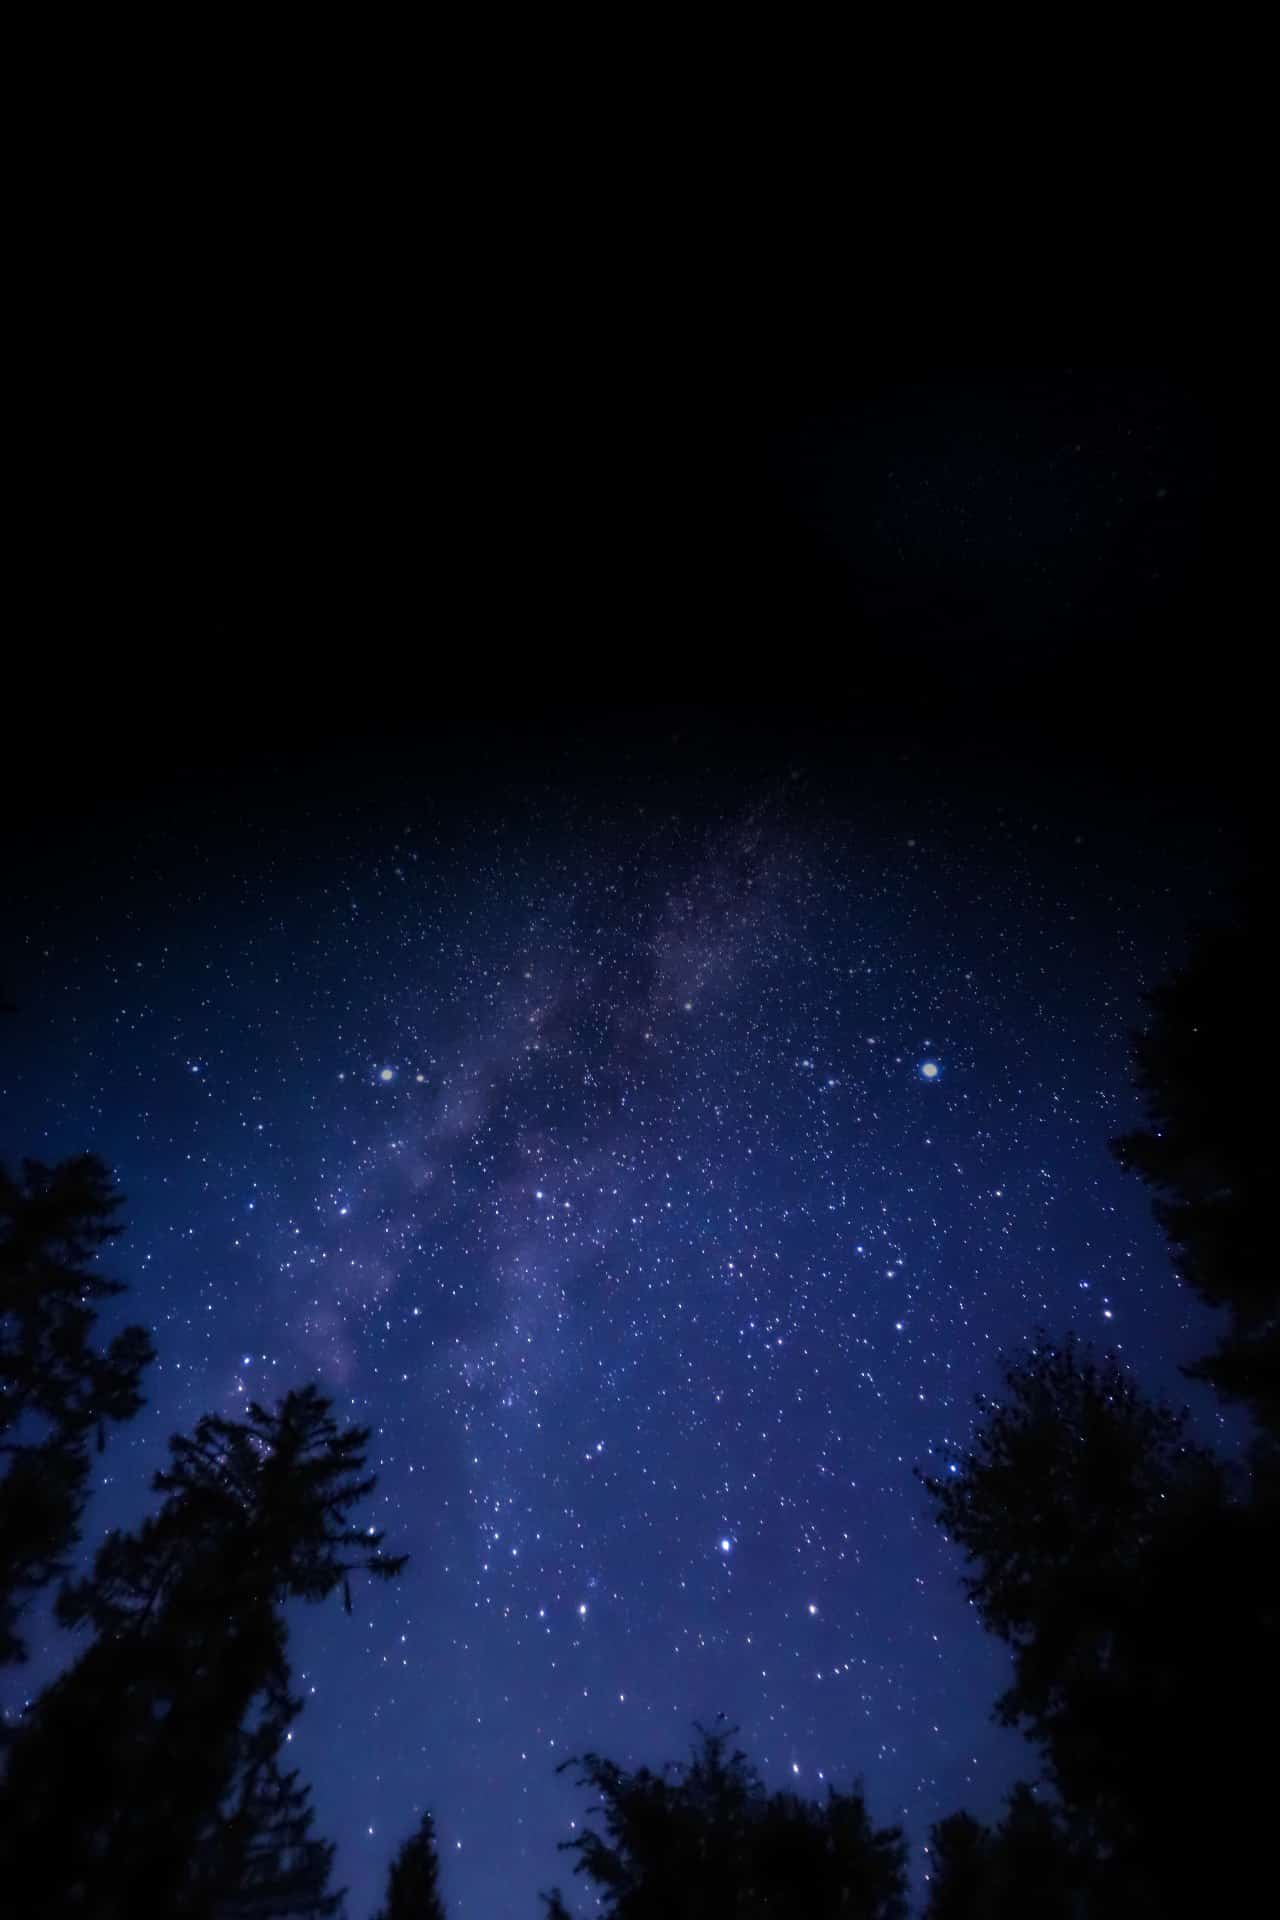 starry night sky with pine tree silhouettes